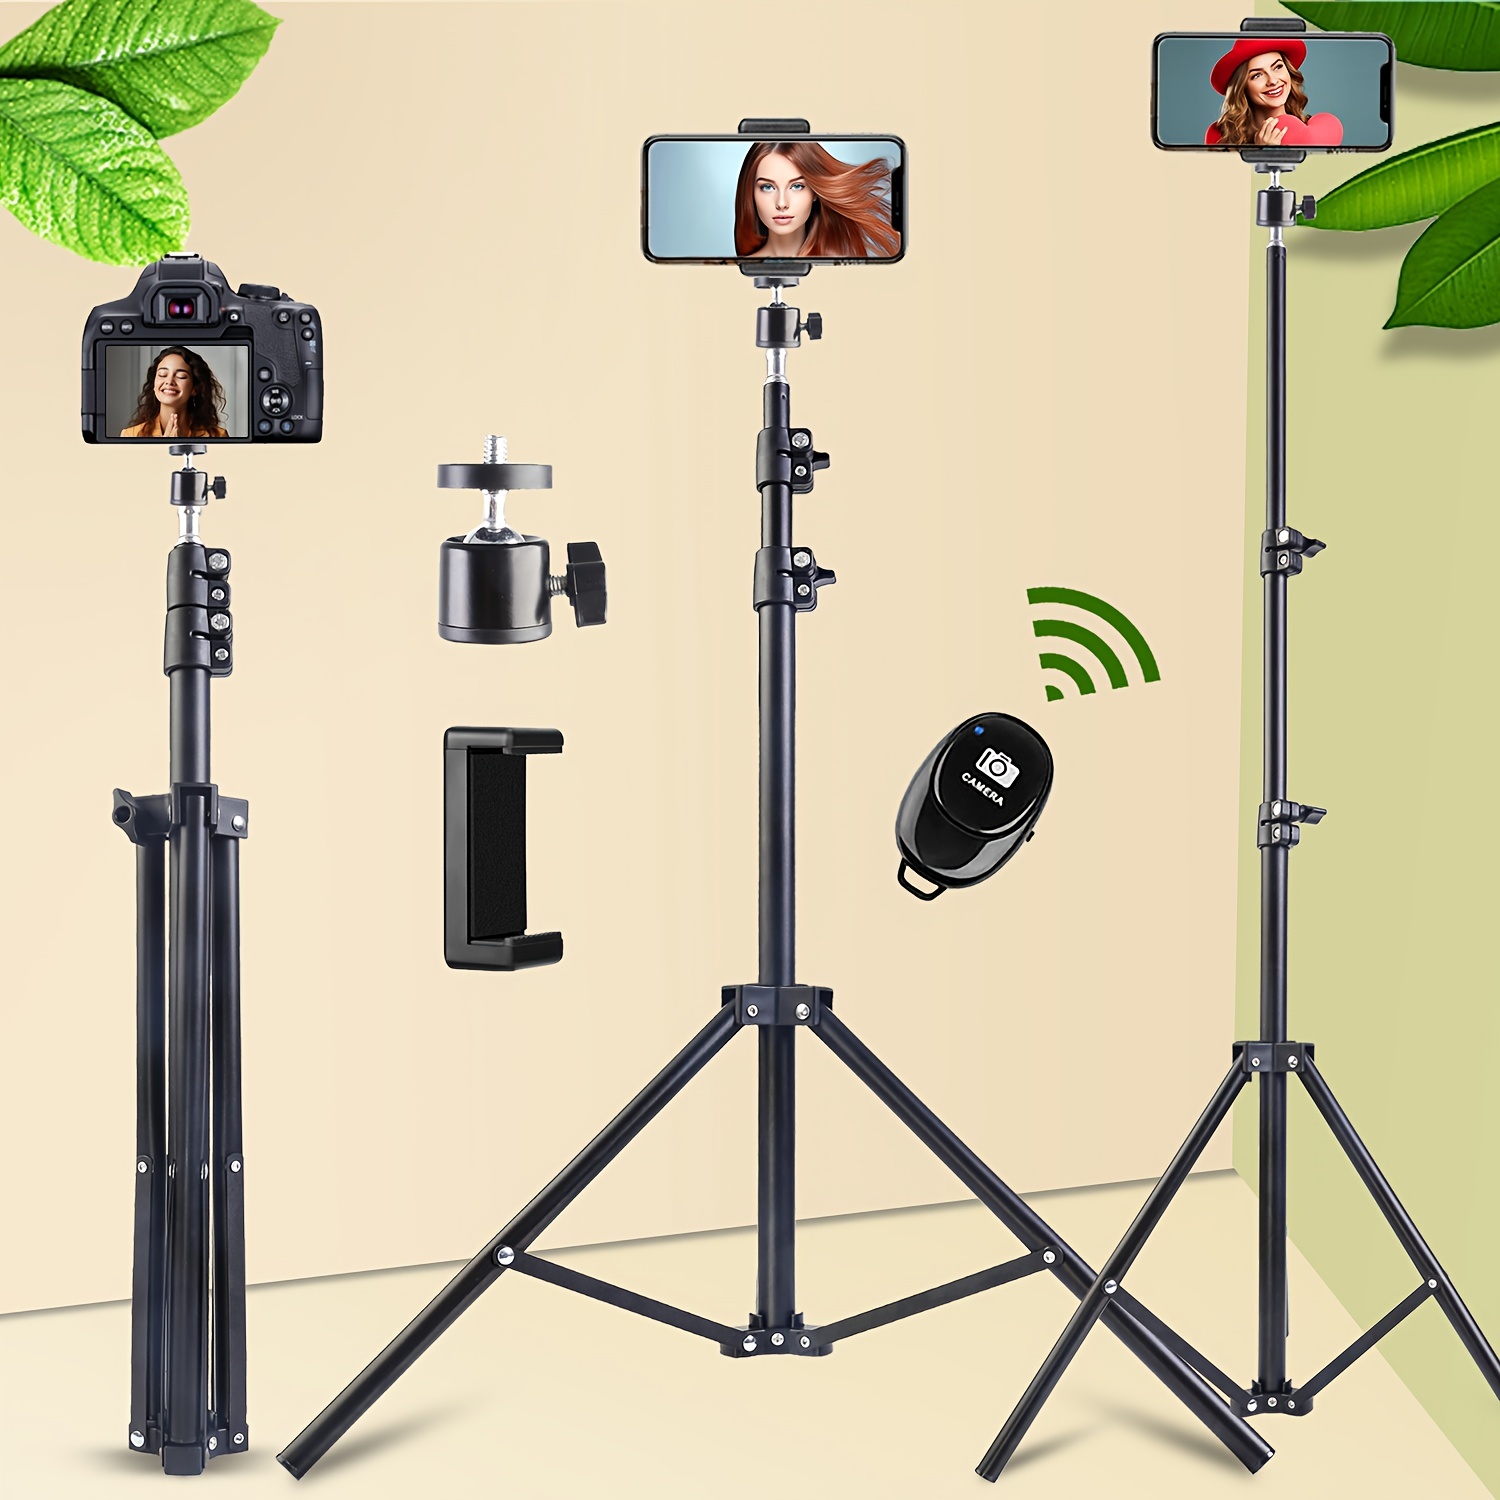 Kamera-Stabilisatoren unterstützt universelle Handheld-Gimbal-Stabilisator  Stativ 360 Auto-Rotation Selfie-Stick für Telefon iPhone 12